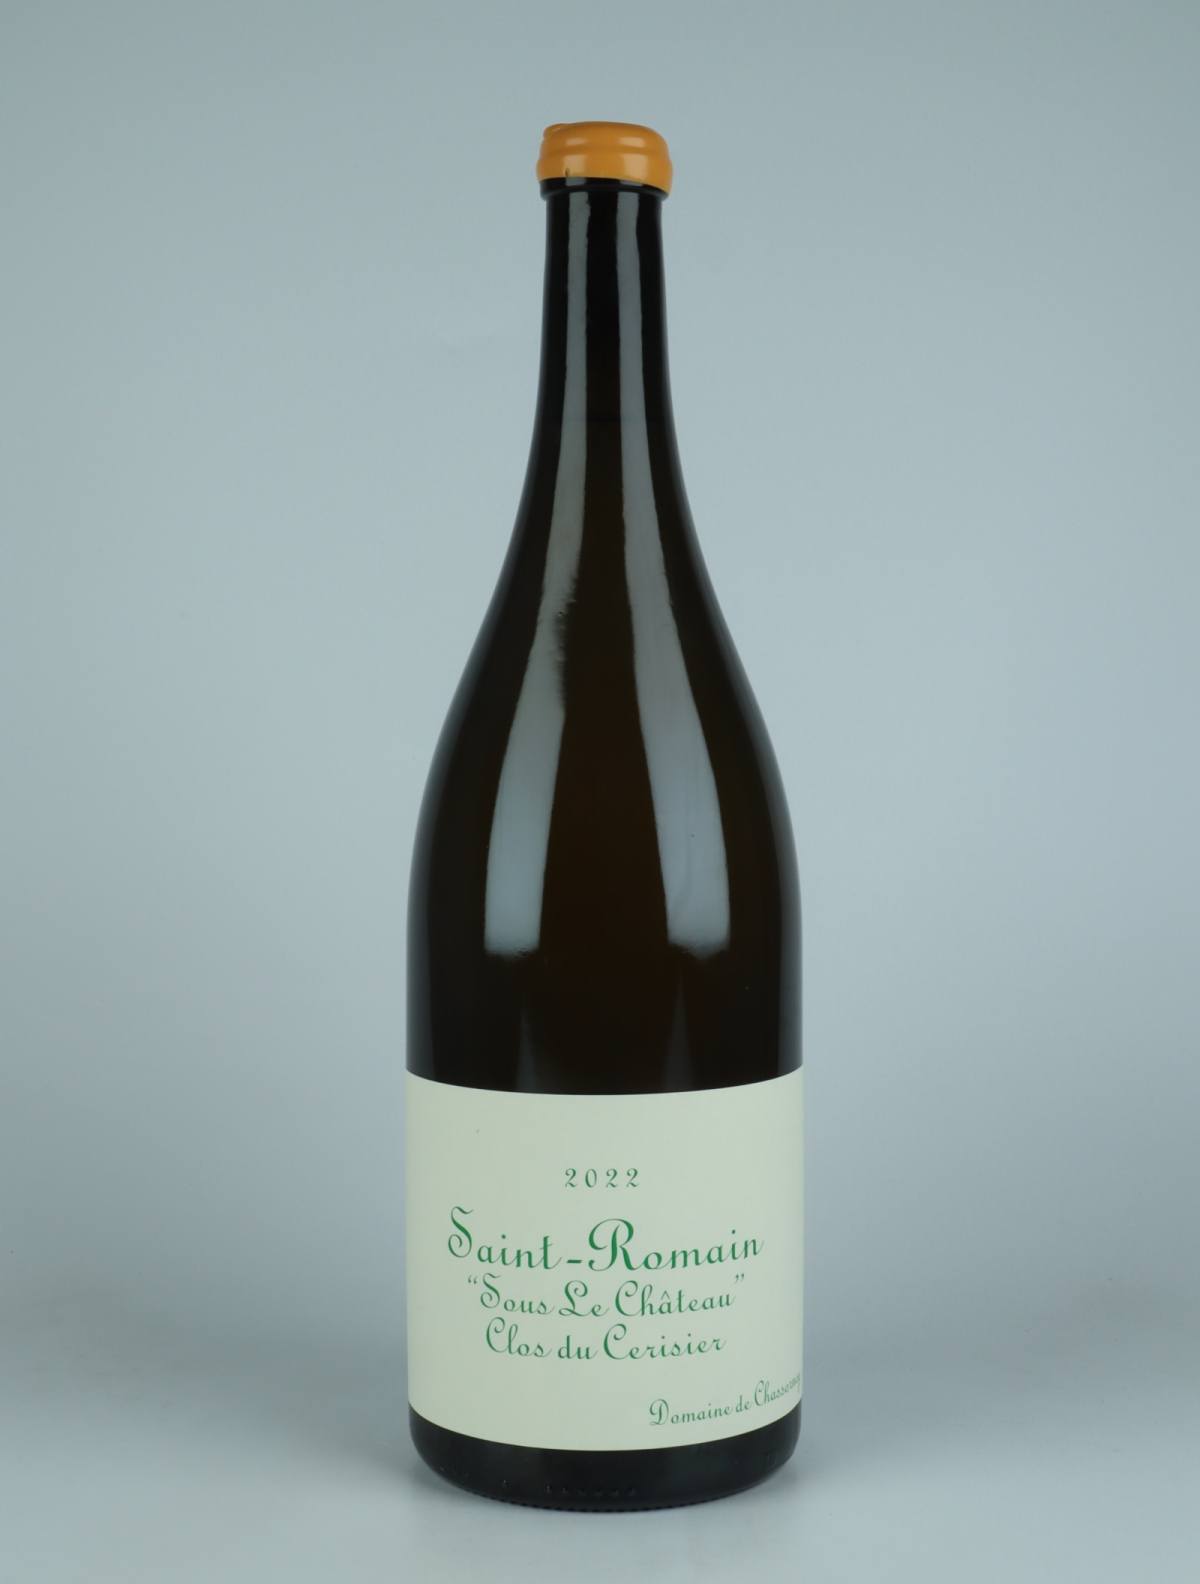 A bottle 2022 Saint Romain Blanc - Clos du Cerisier - Magnum White wine from Domaine de Chassorney, Burgundy in France